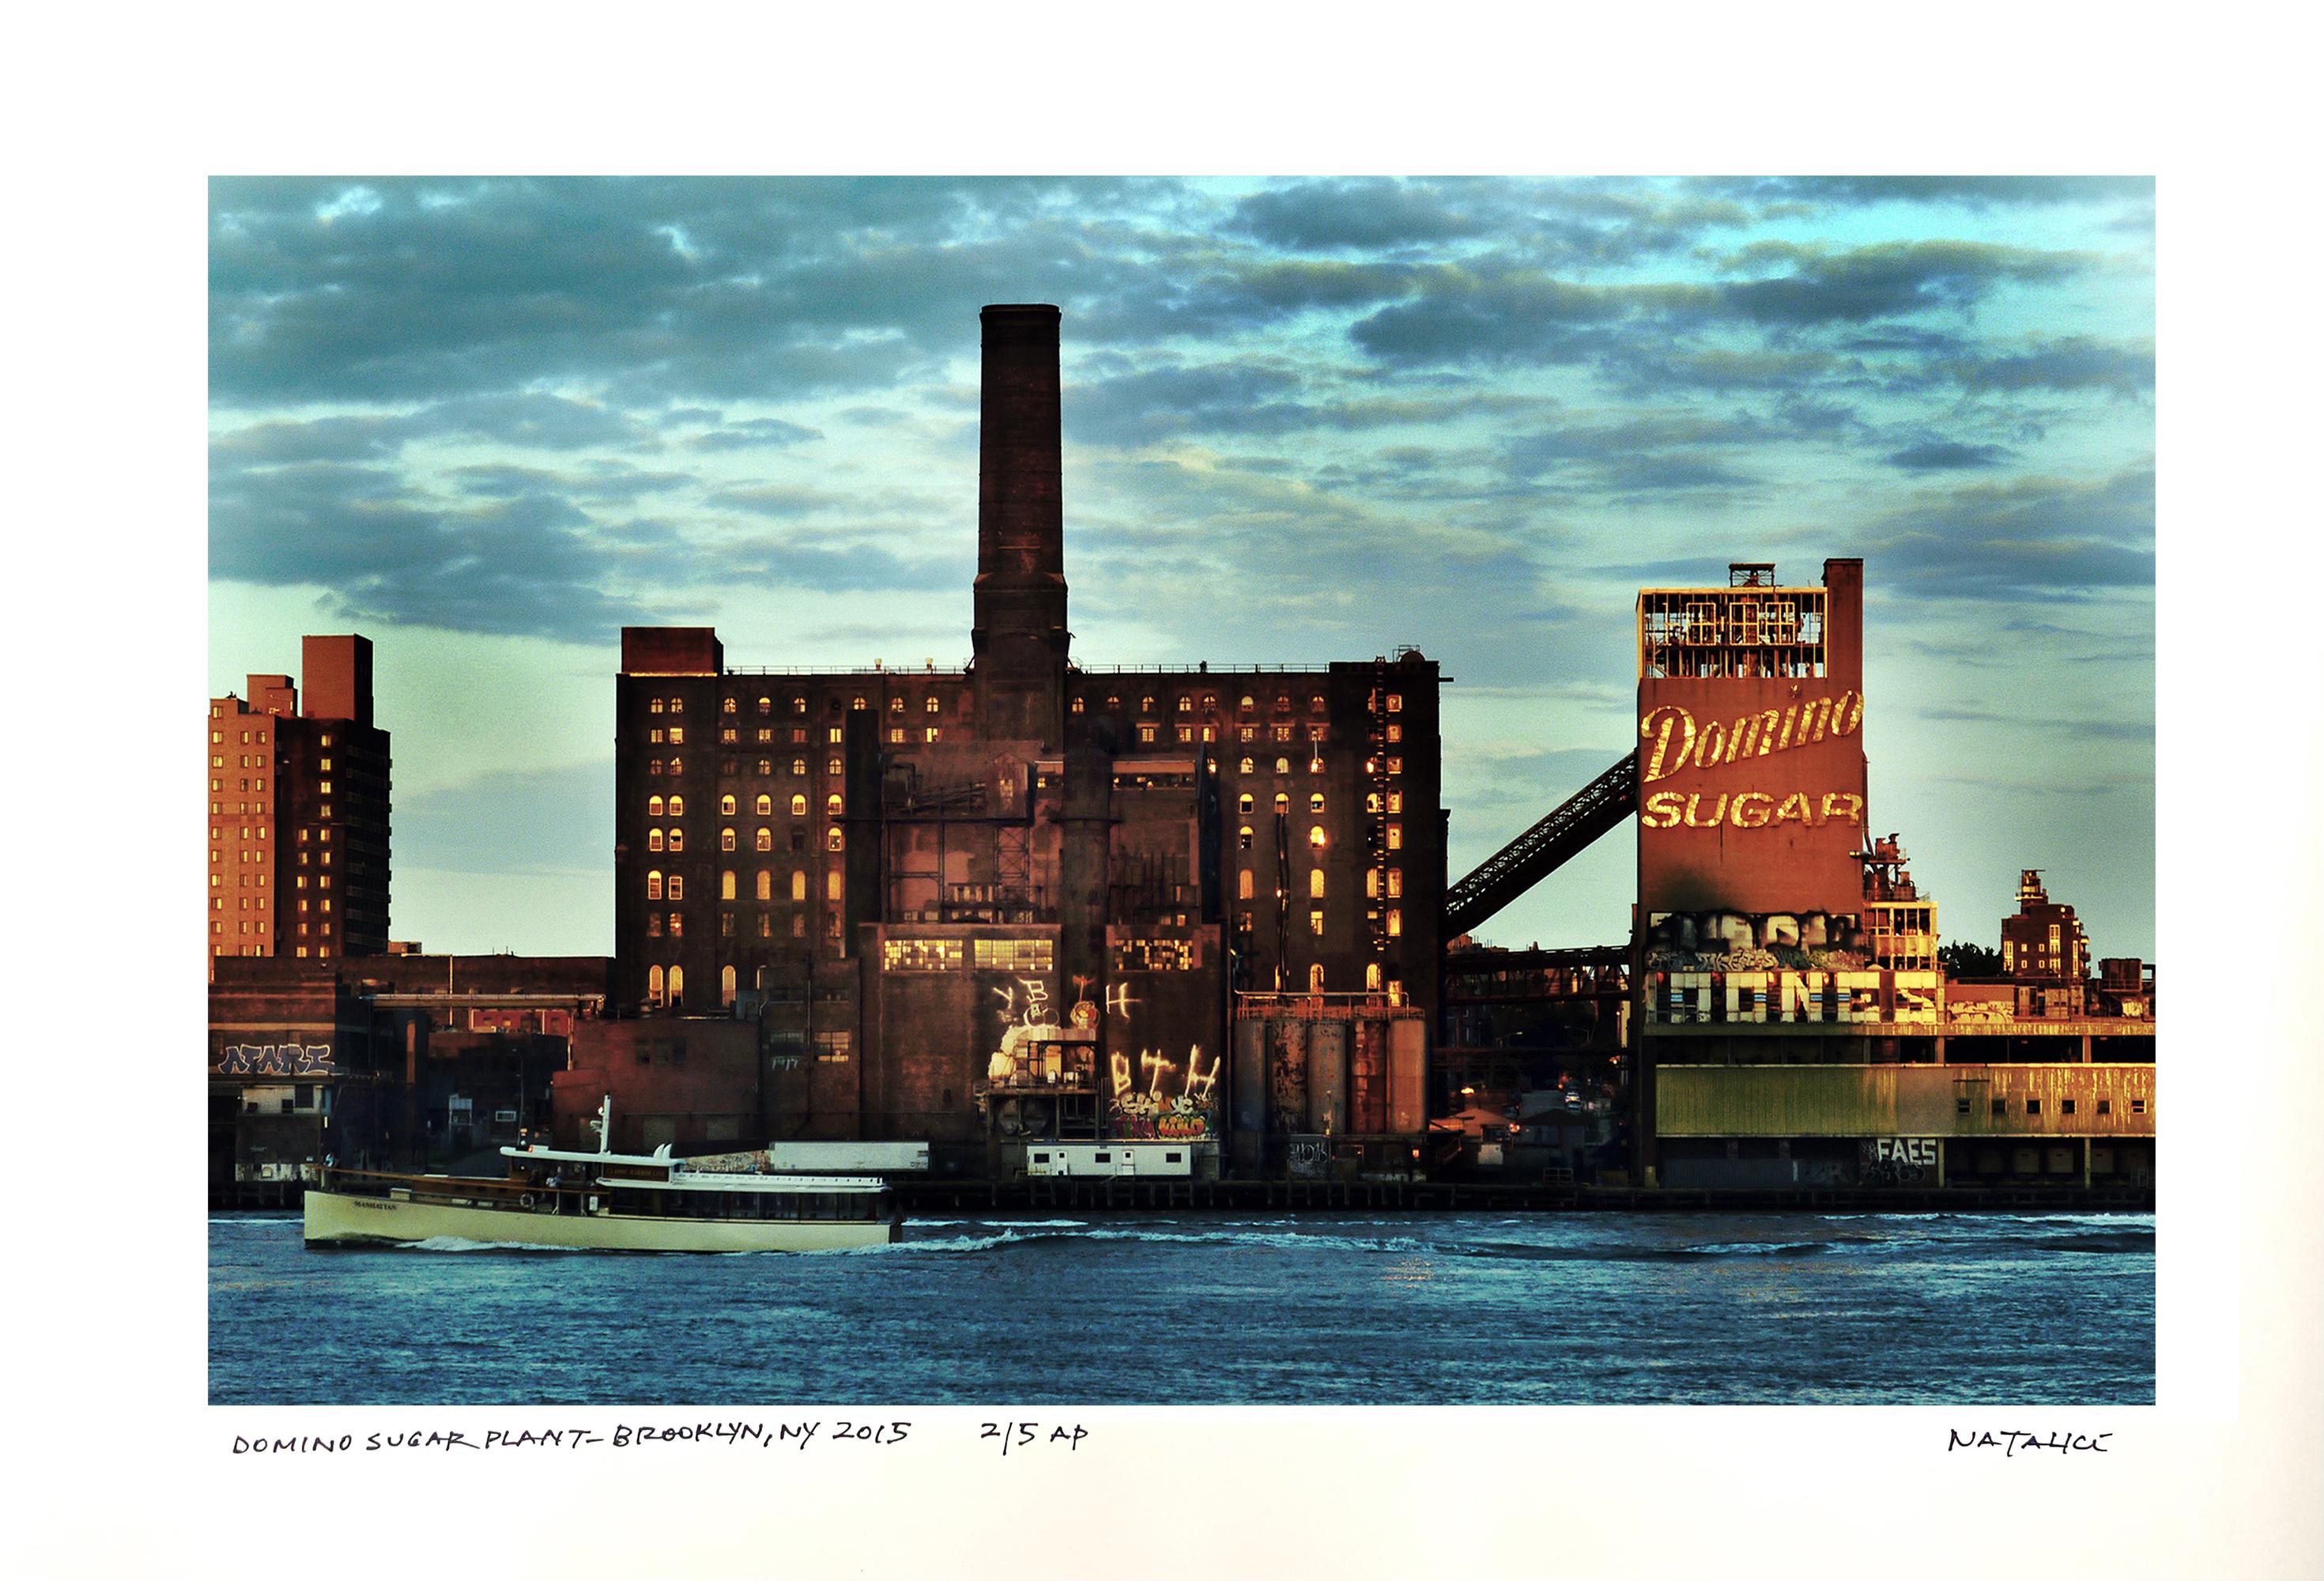 Domino Sugar Factory Williamsburg Brooklyn photo (Brooklyn New York photograph)  - Photograph by Fernando Natalici